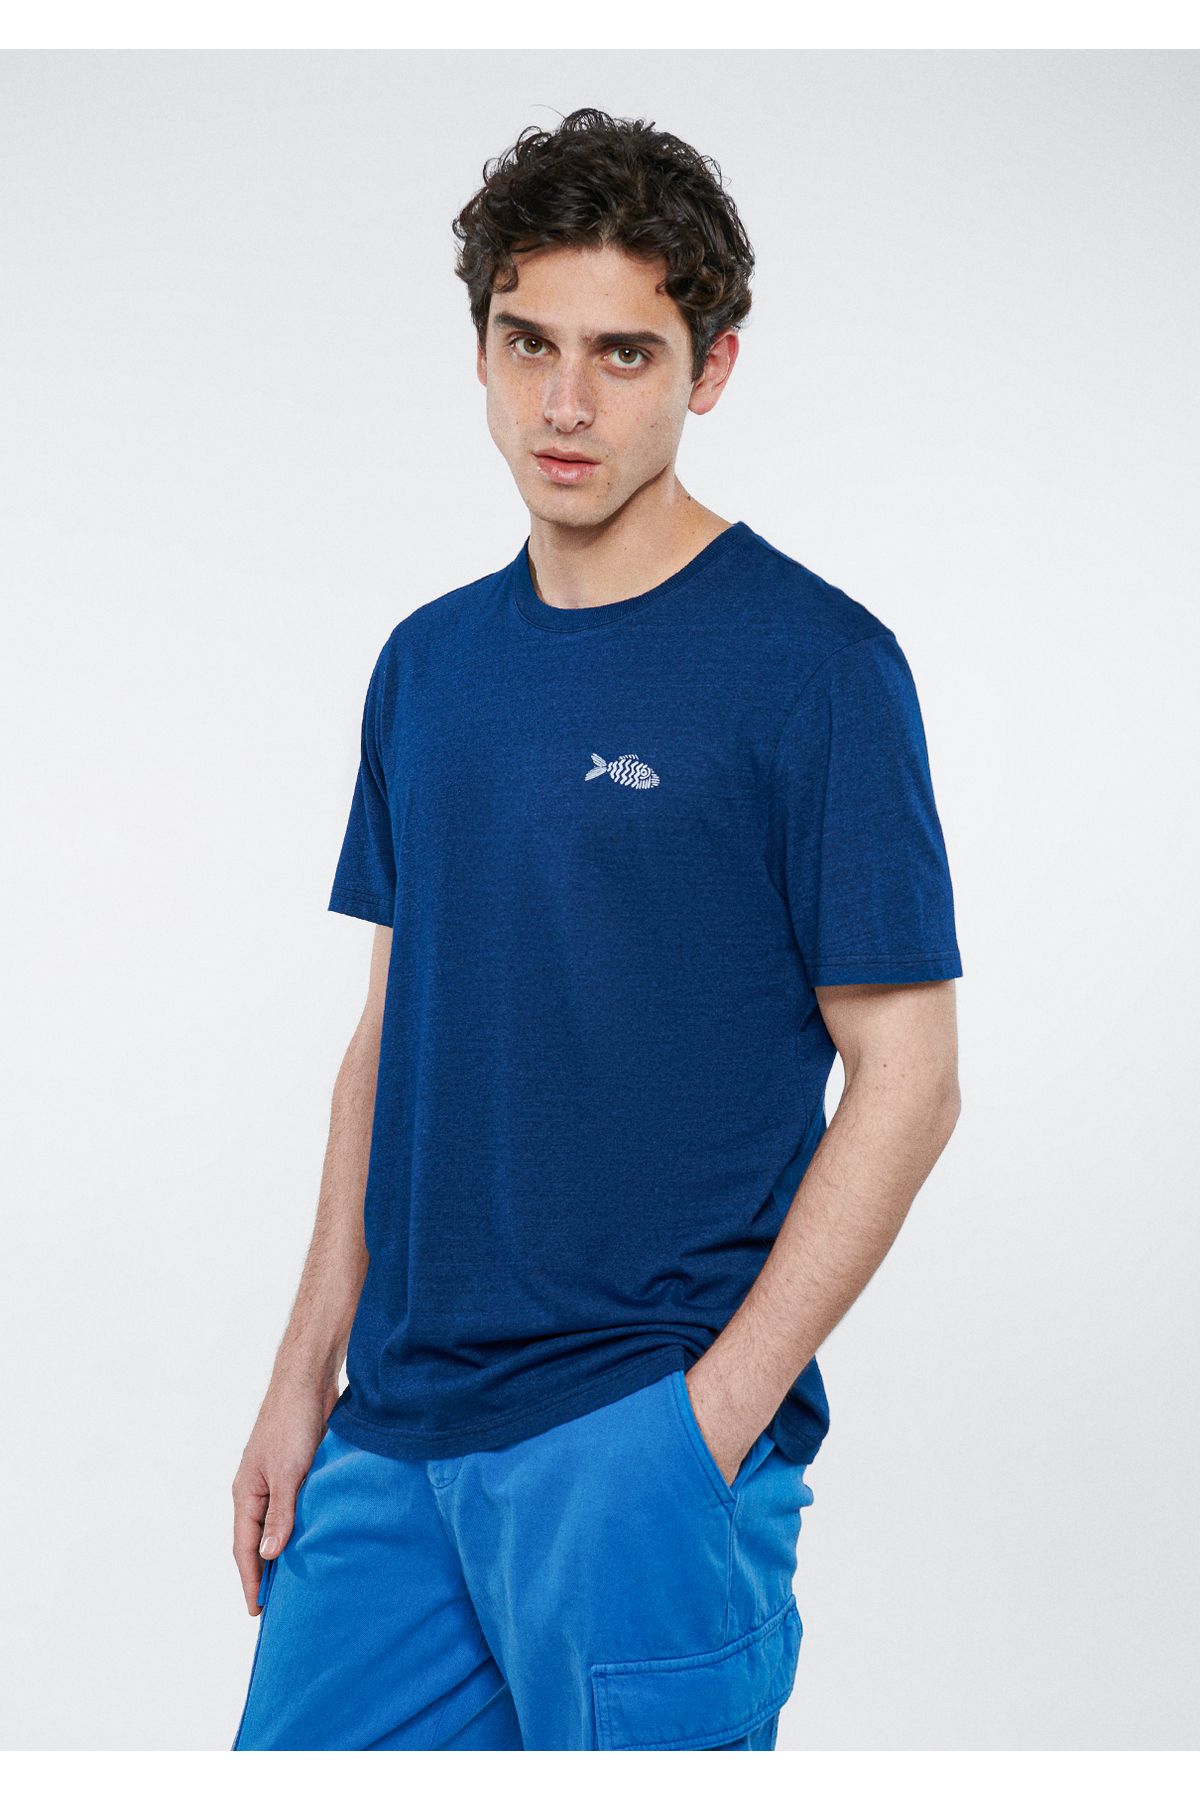 Mavi تی شرت آبی چاپ شده به صورت معمولی مناسب / برش 0611547-18790